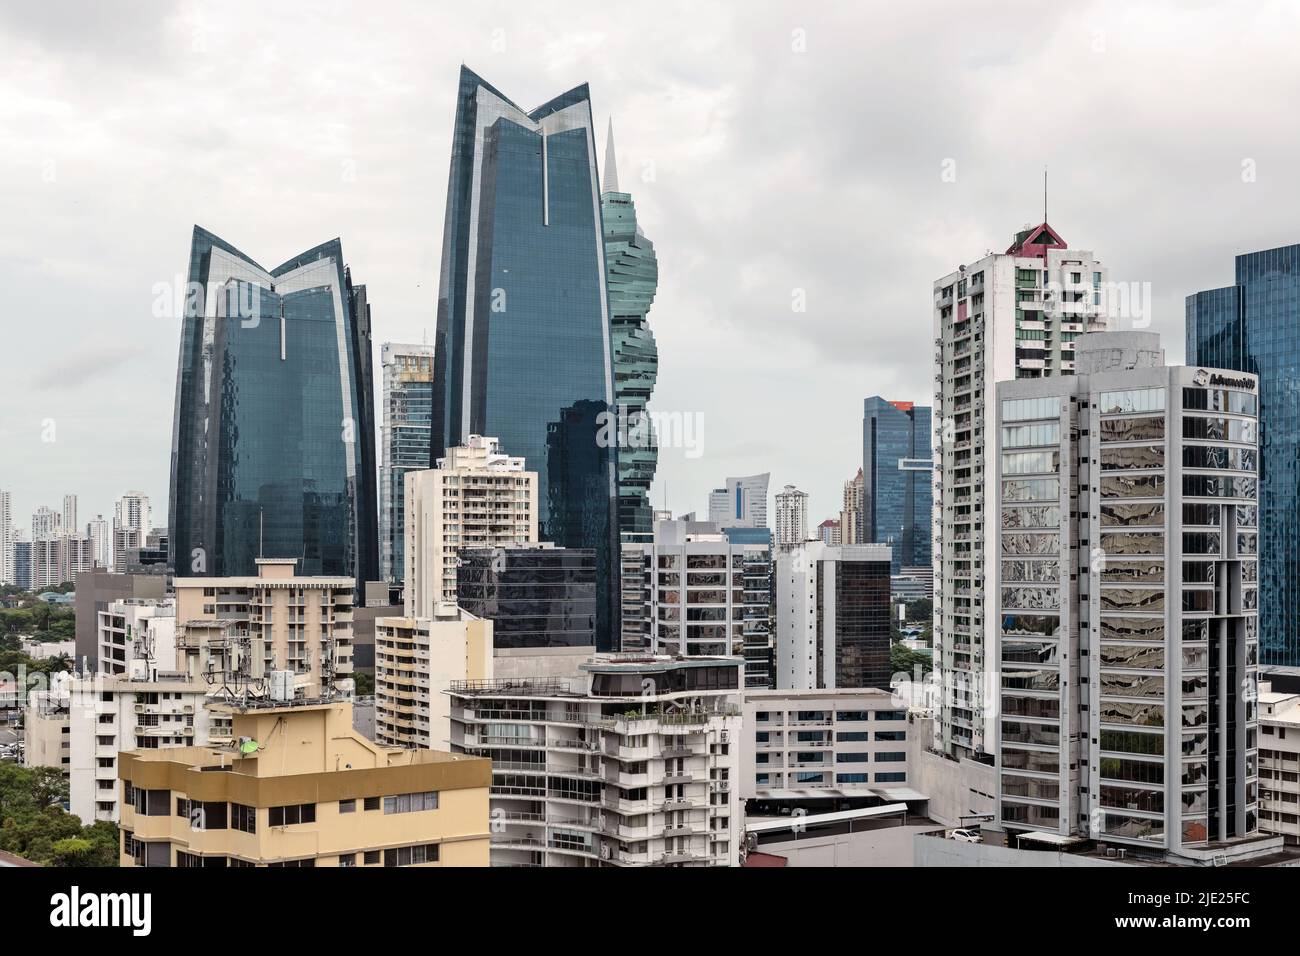 Panama City, Panama - October 28, 2021: View at the skyline of skyscrapers in Panama City, Panama. Stock Photo